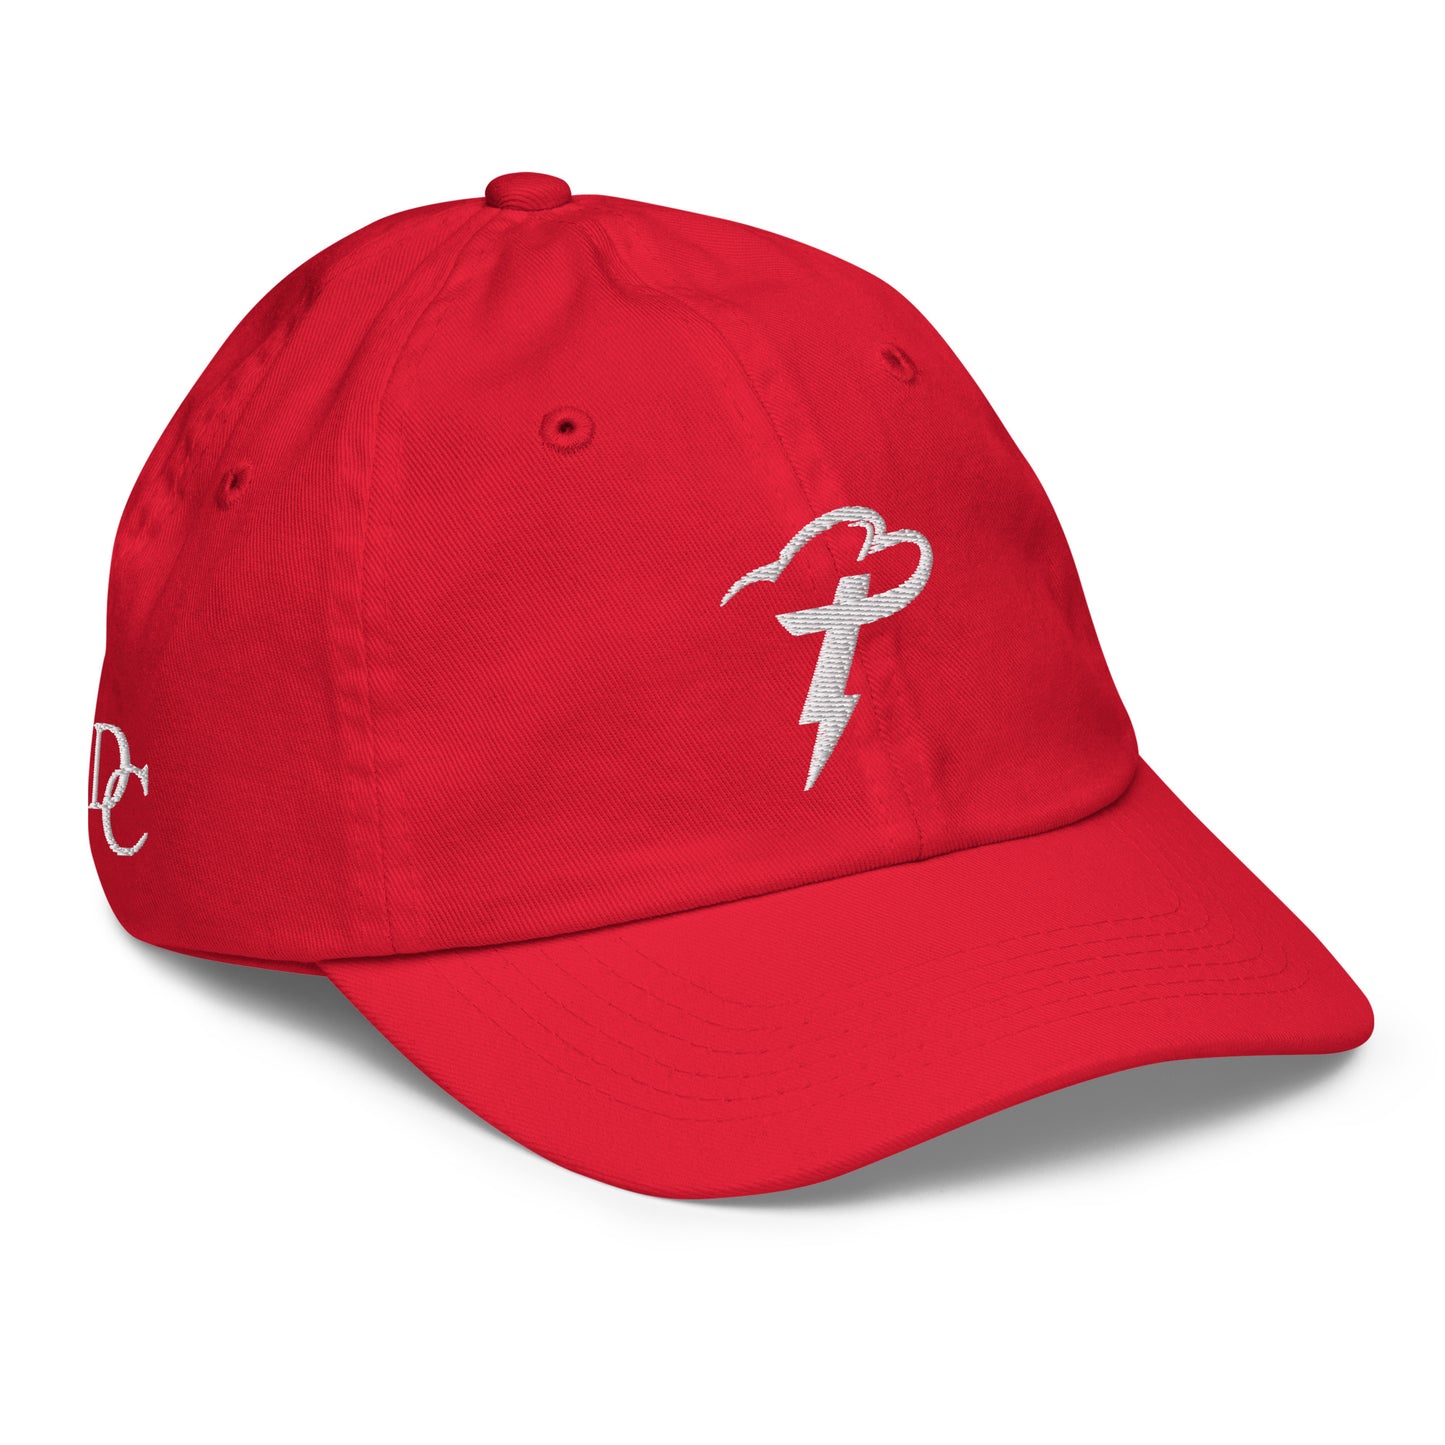 DC Thunder - Youth baseball cap